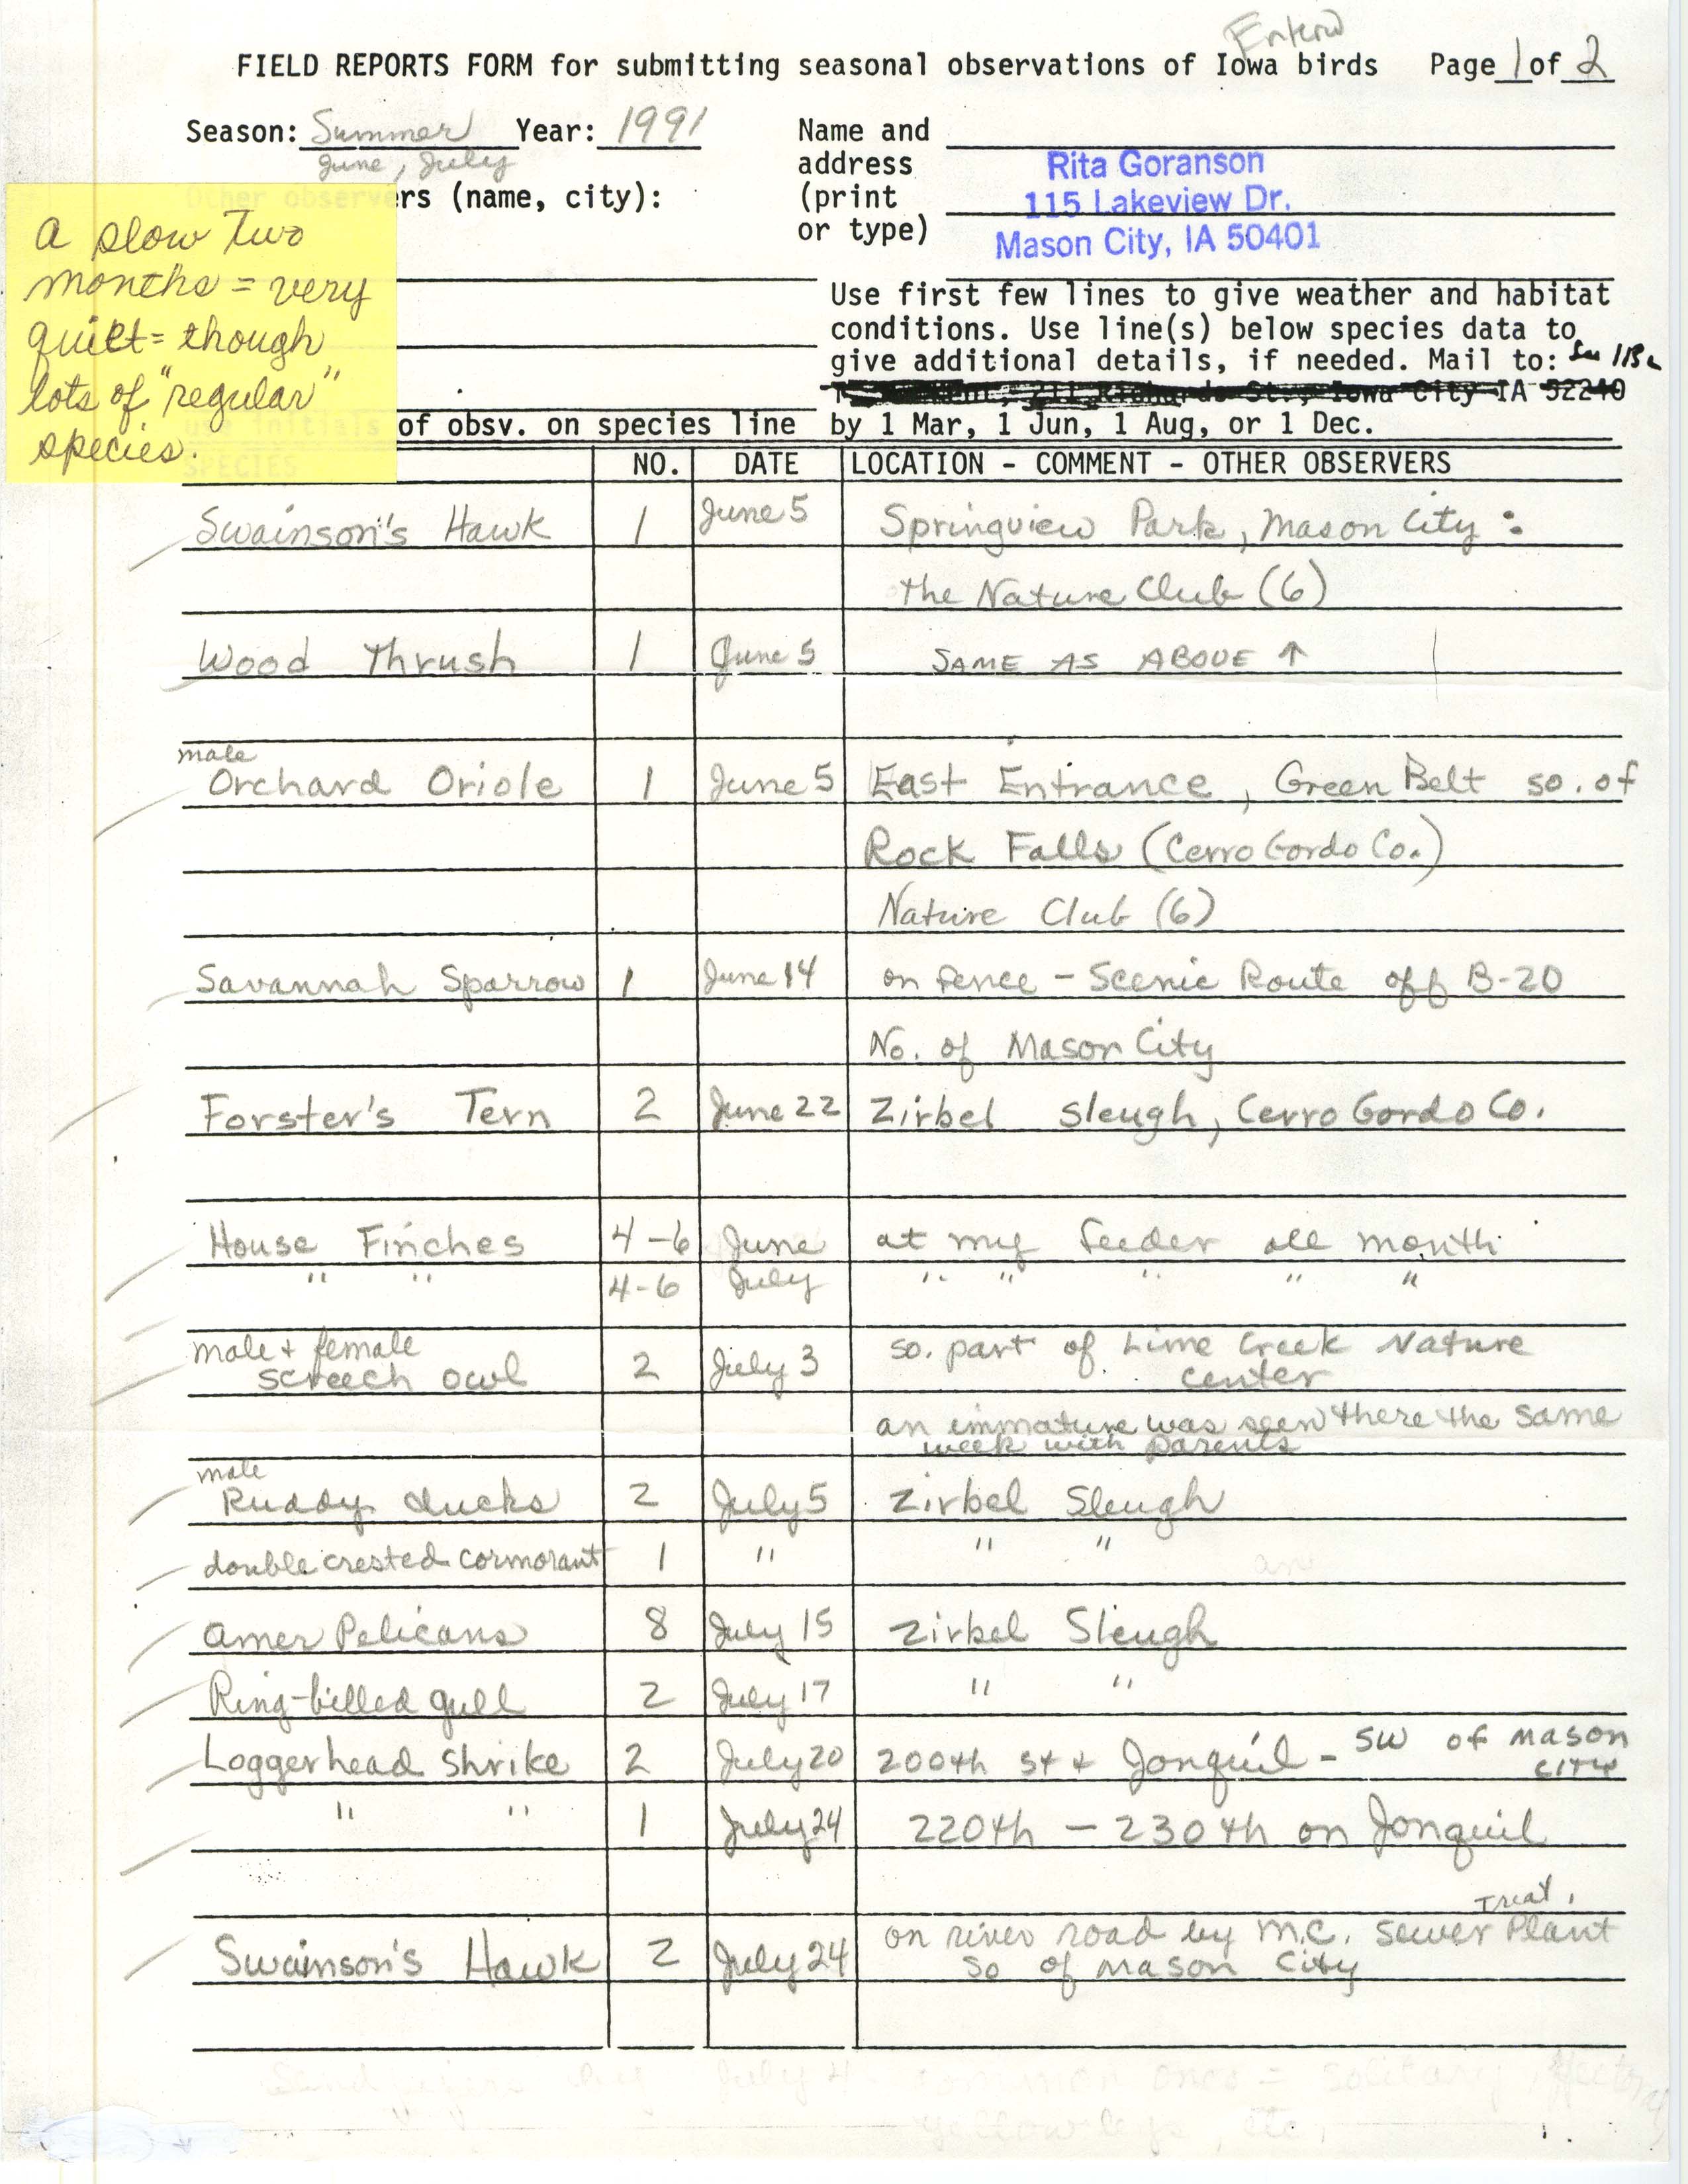 Field reports form for submitting seasonal observations of Iowa birds, Rita Goranson, summer 1991